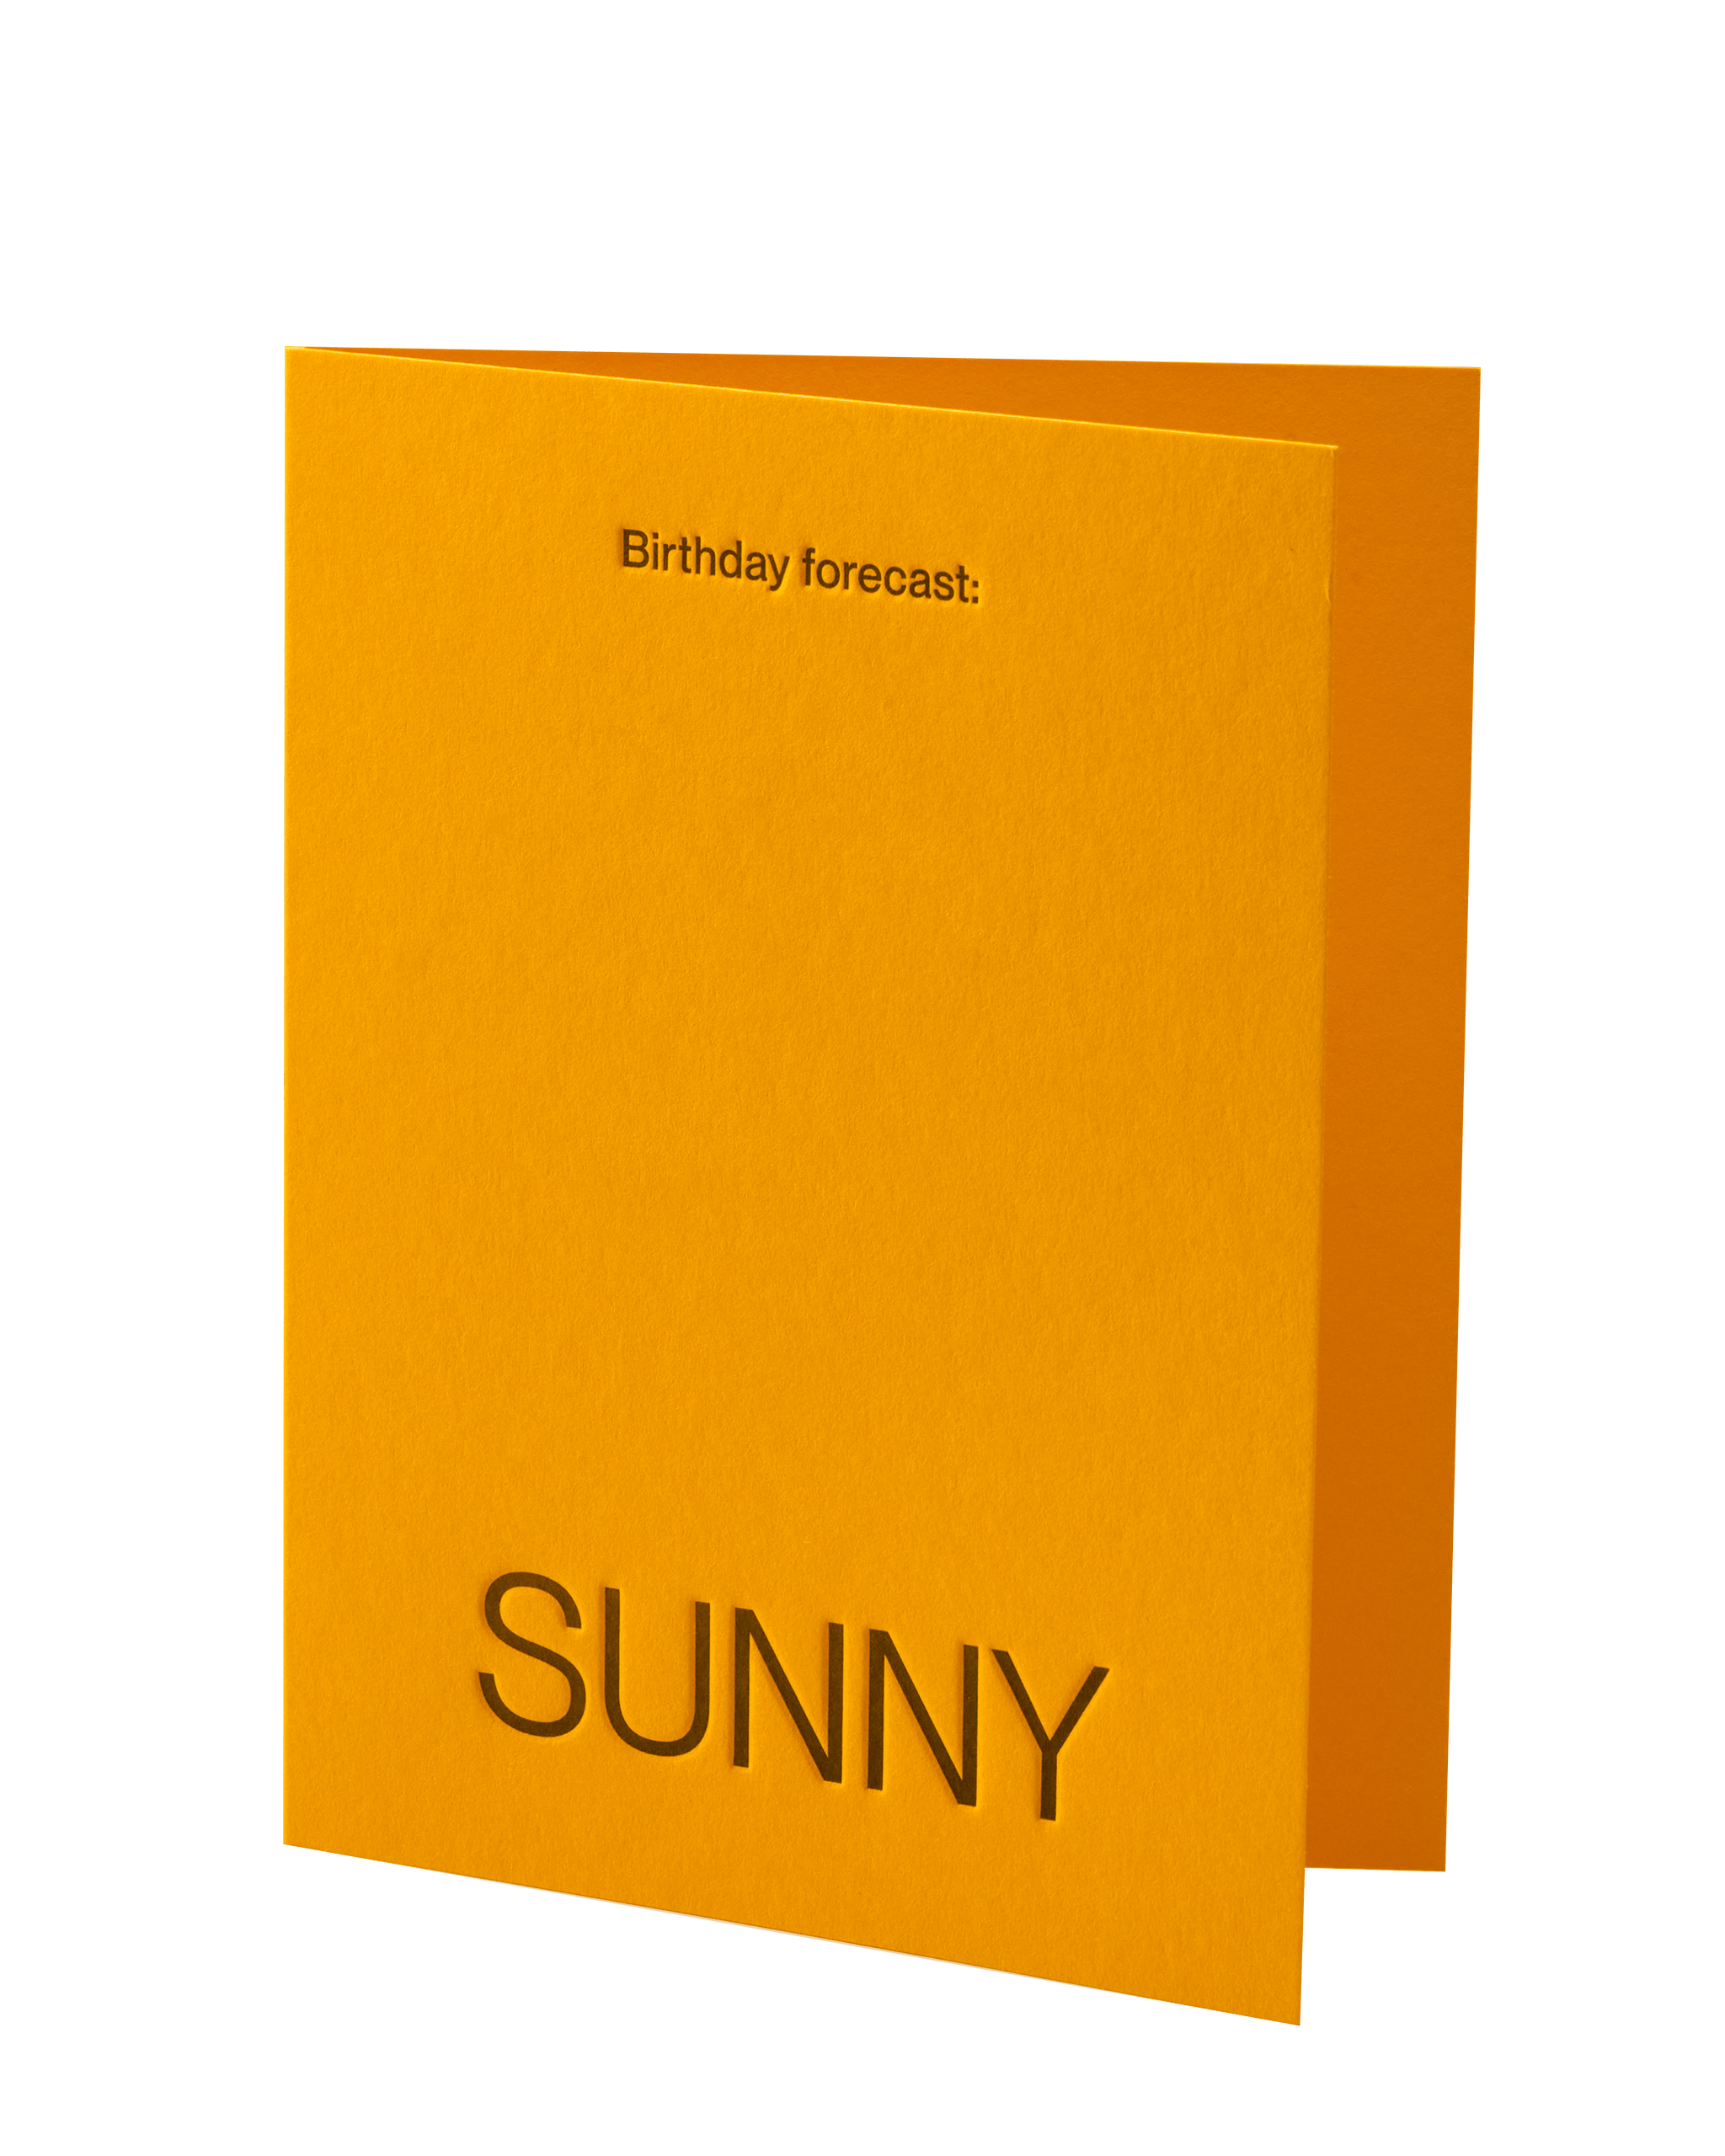 Short Talk Greeting Cards Birthday Forecast: Sunny by Short Talk